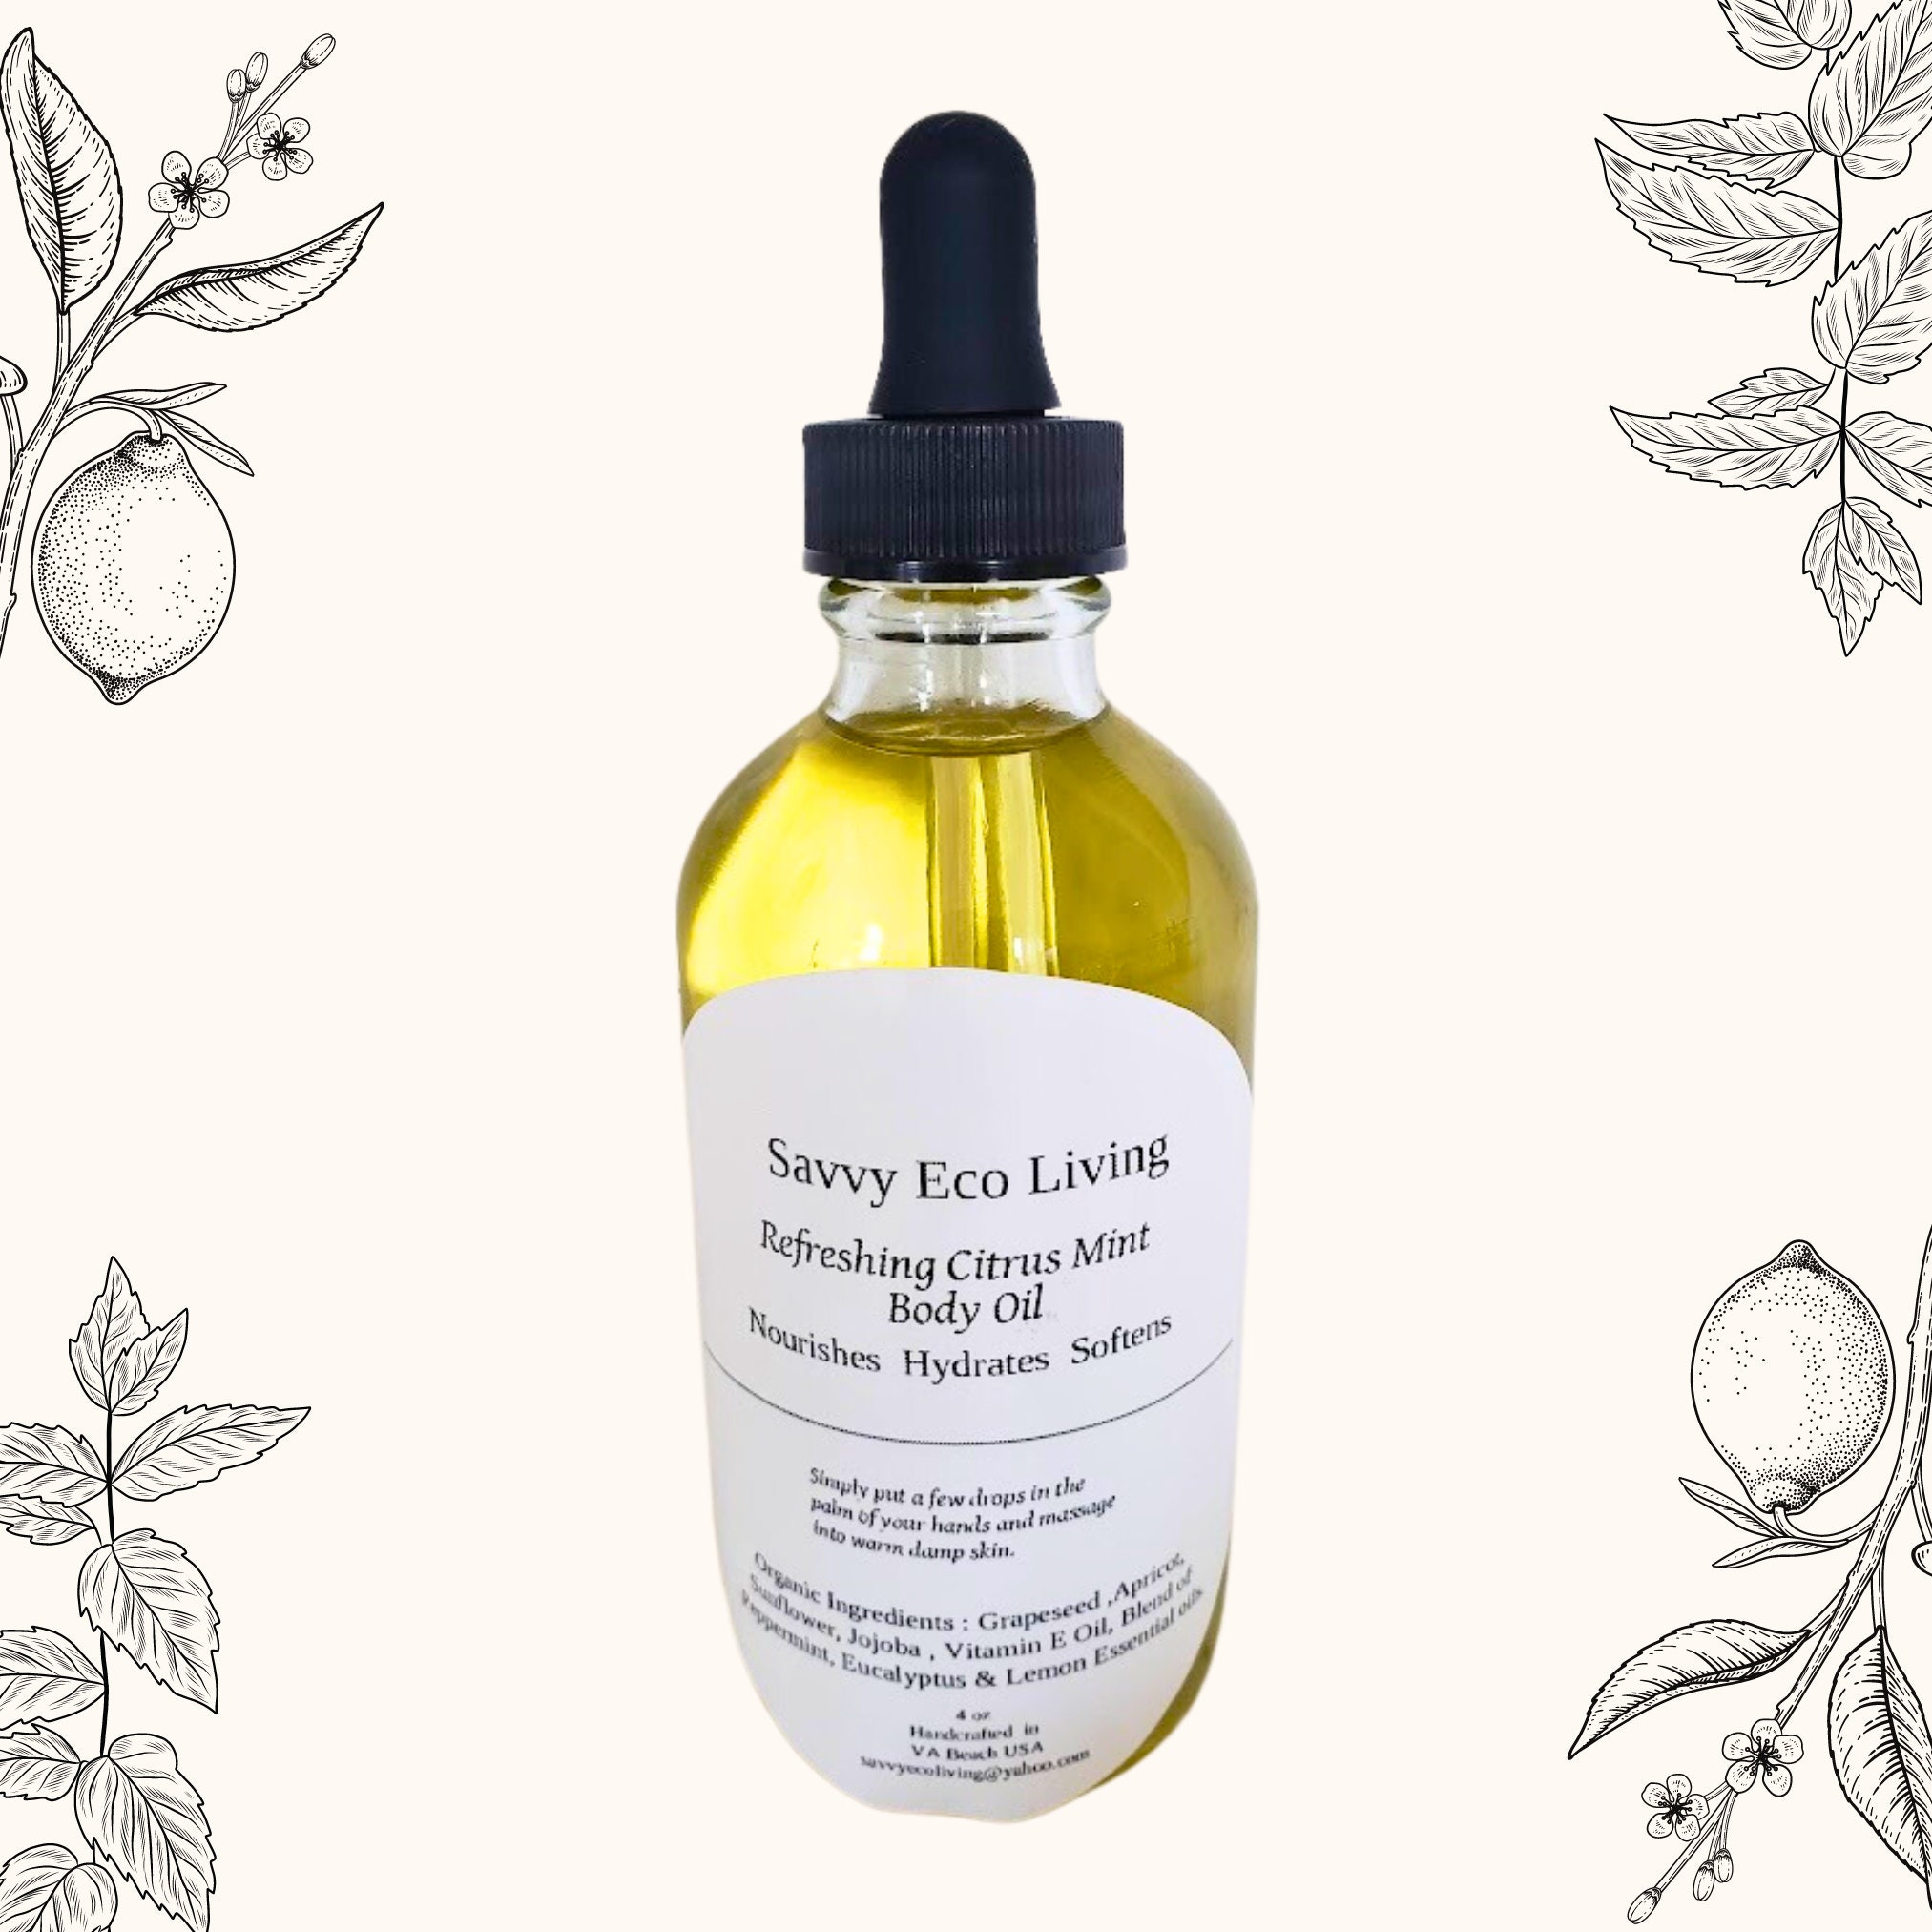 Natural Vanilla Body Oil  Organic Camellia Rose + Sweet Almond Oil –  SkinFoodFix